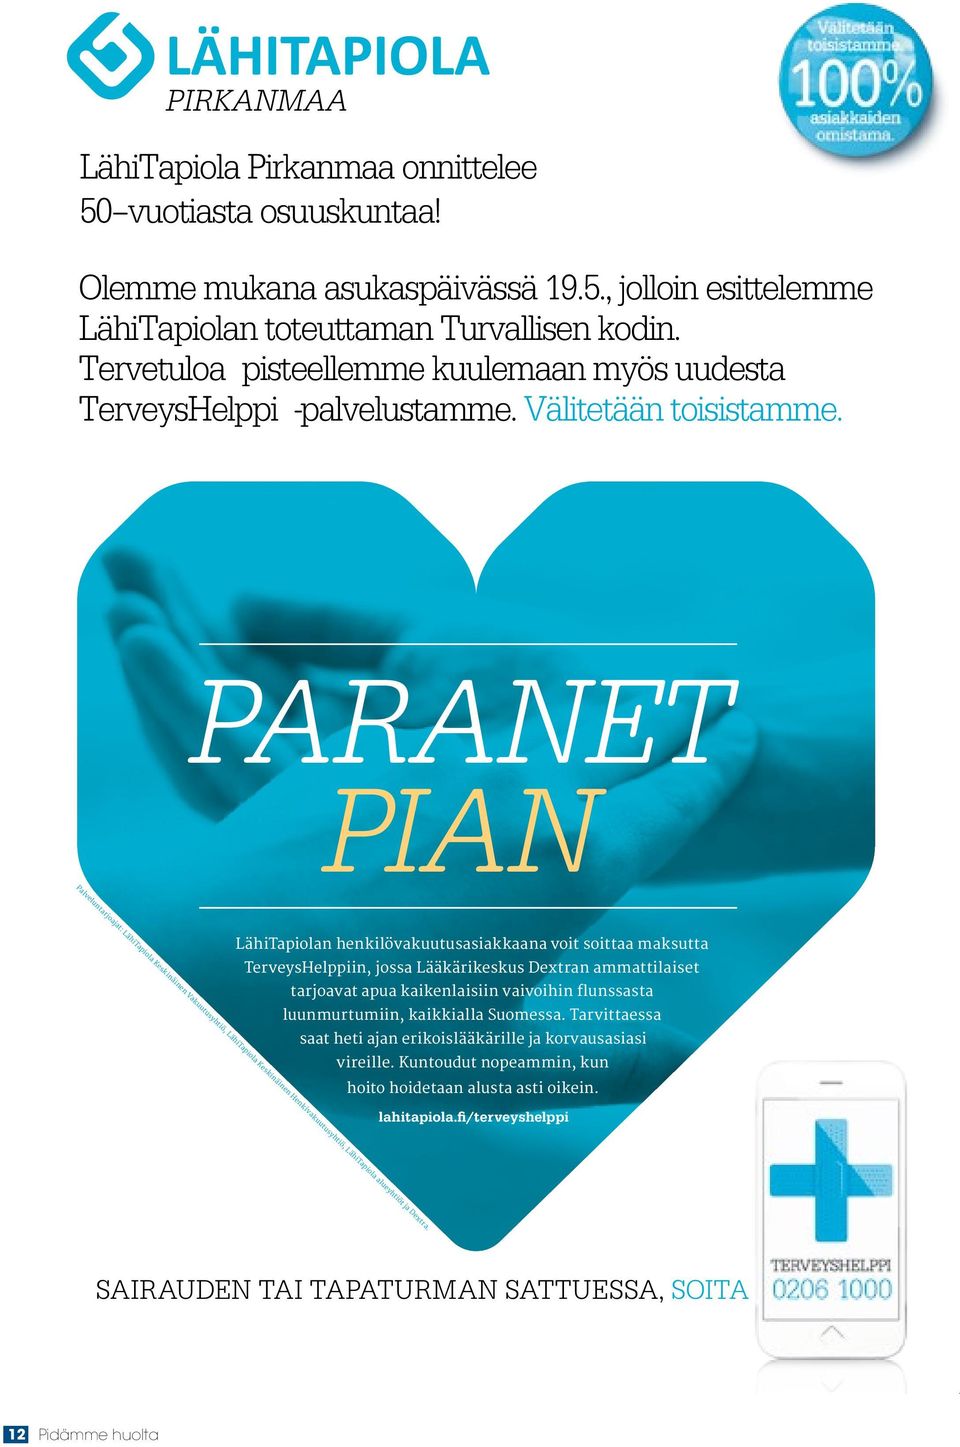 PARANET PIAN Palveluntarjoajat: LähiTapiola Keskinäinen Vakuutusyhtiö, LähiTapiola Keskinäinen Henkivakuutusyhtiö, LähiTapiola alueyhtiöt ja Dextra.